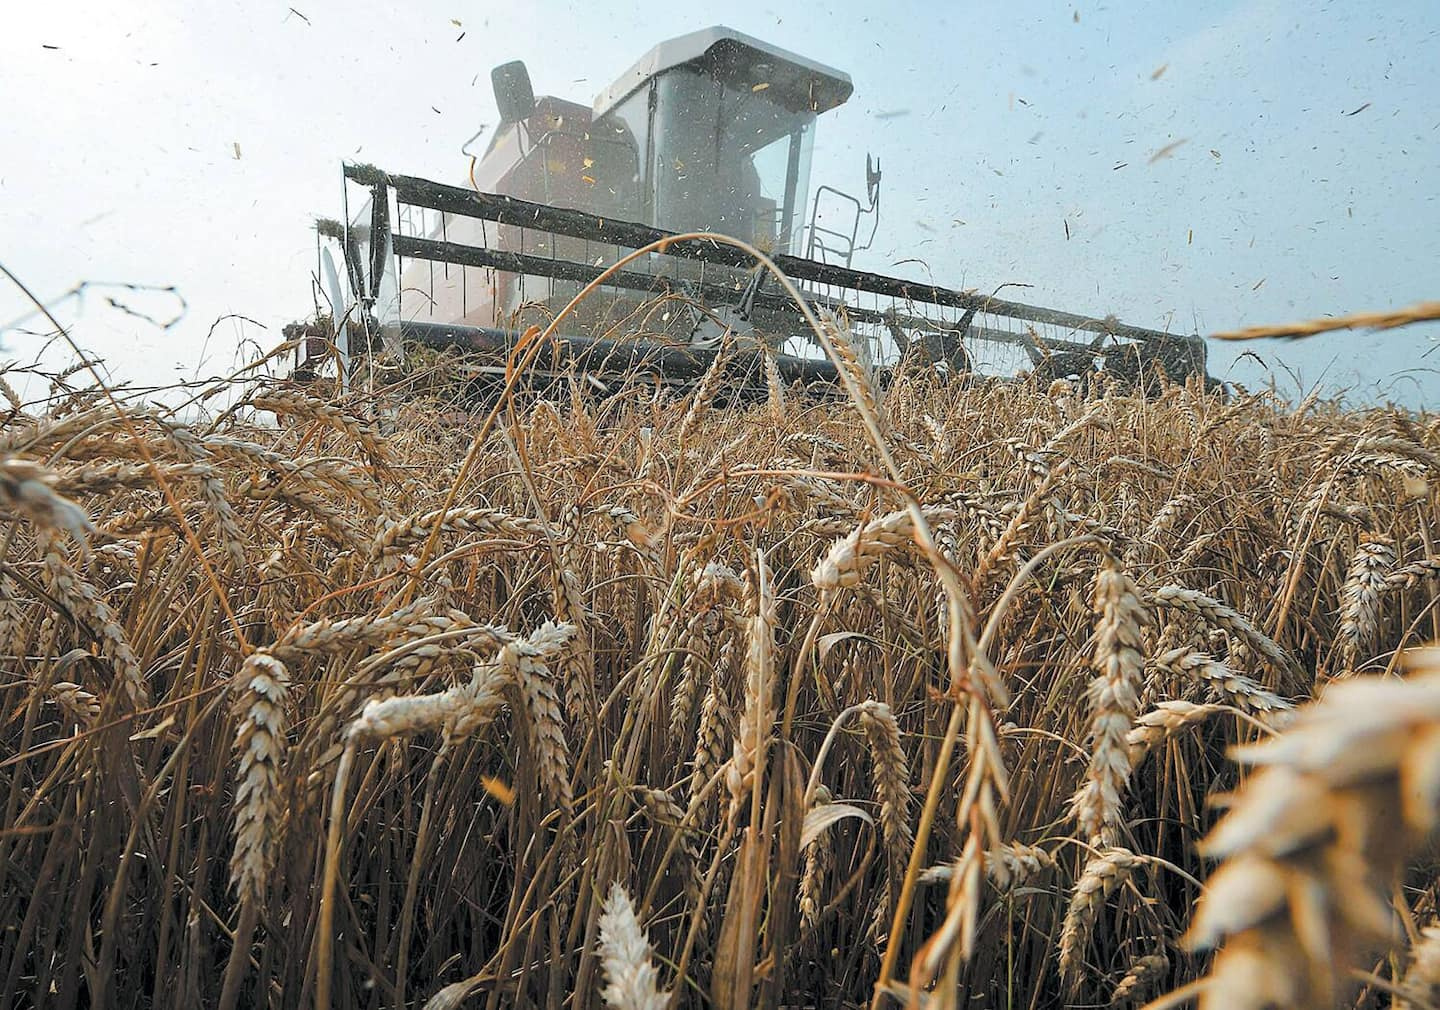 Russia suspends participation in Ukrainian grain export deal